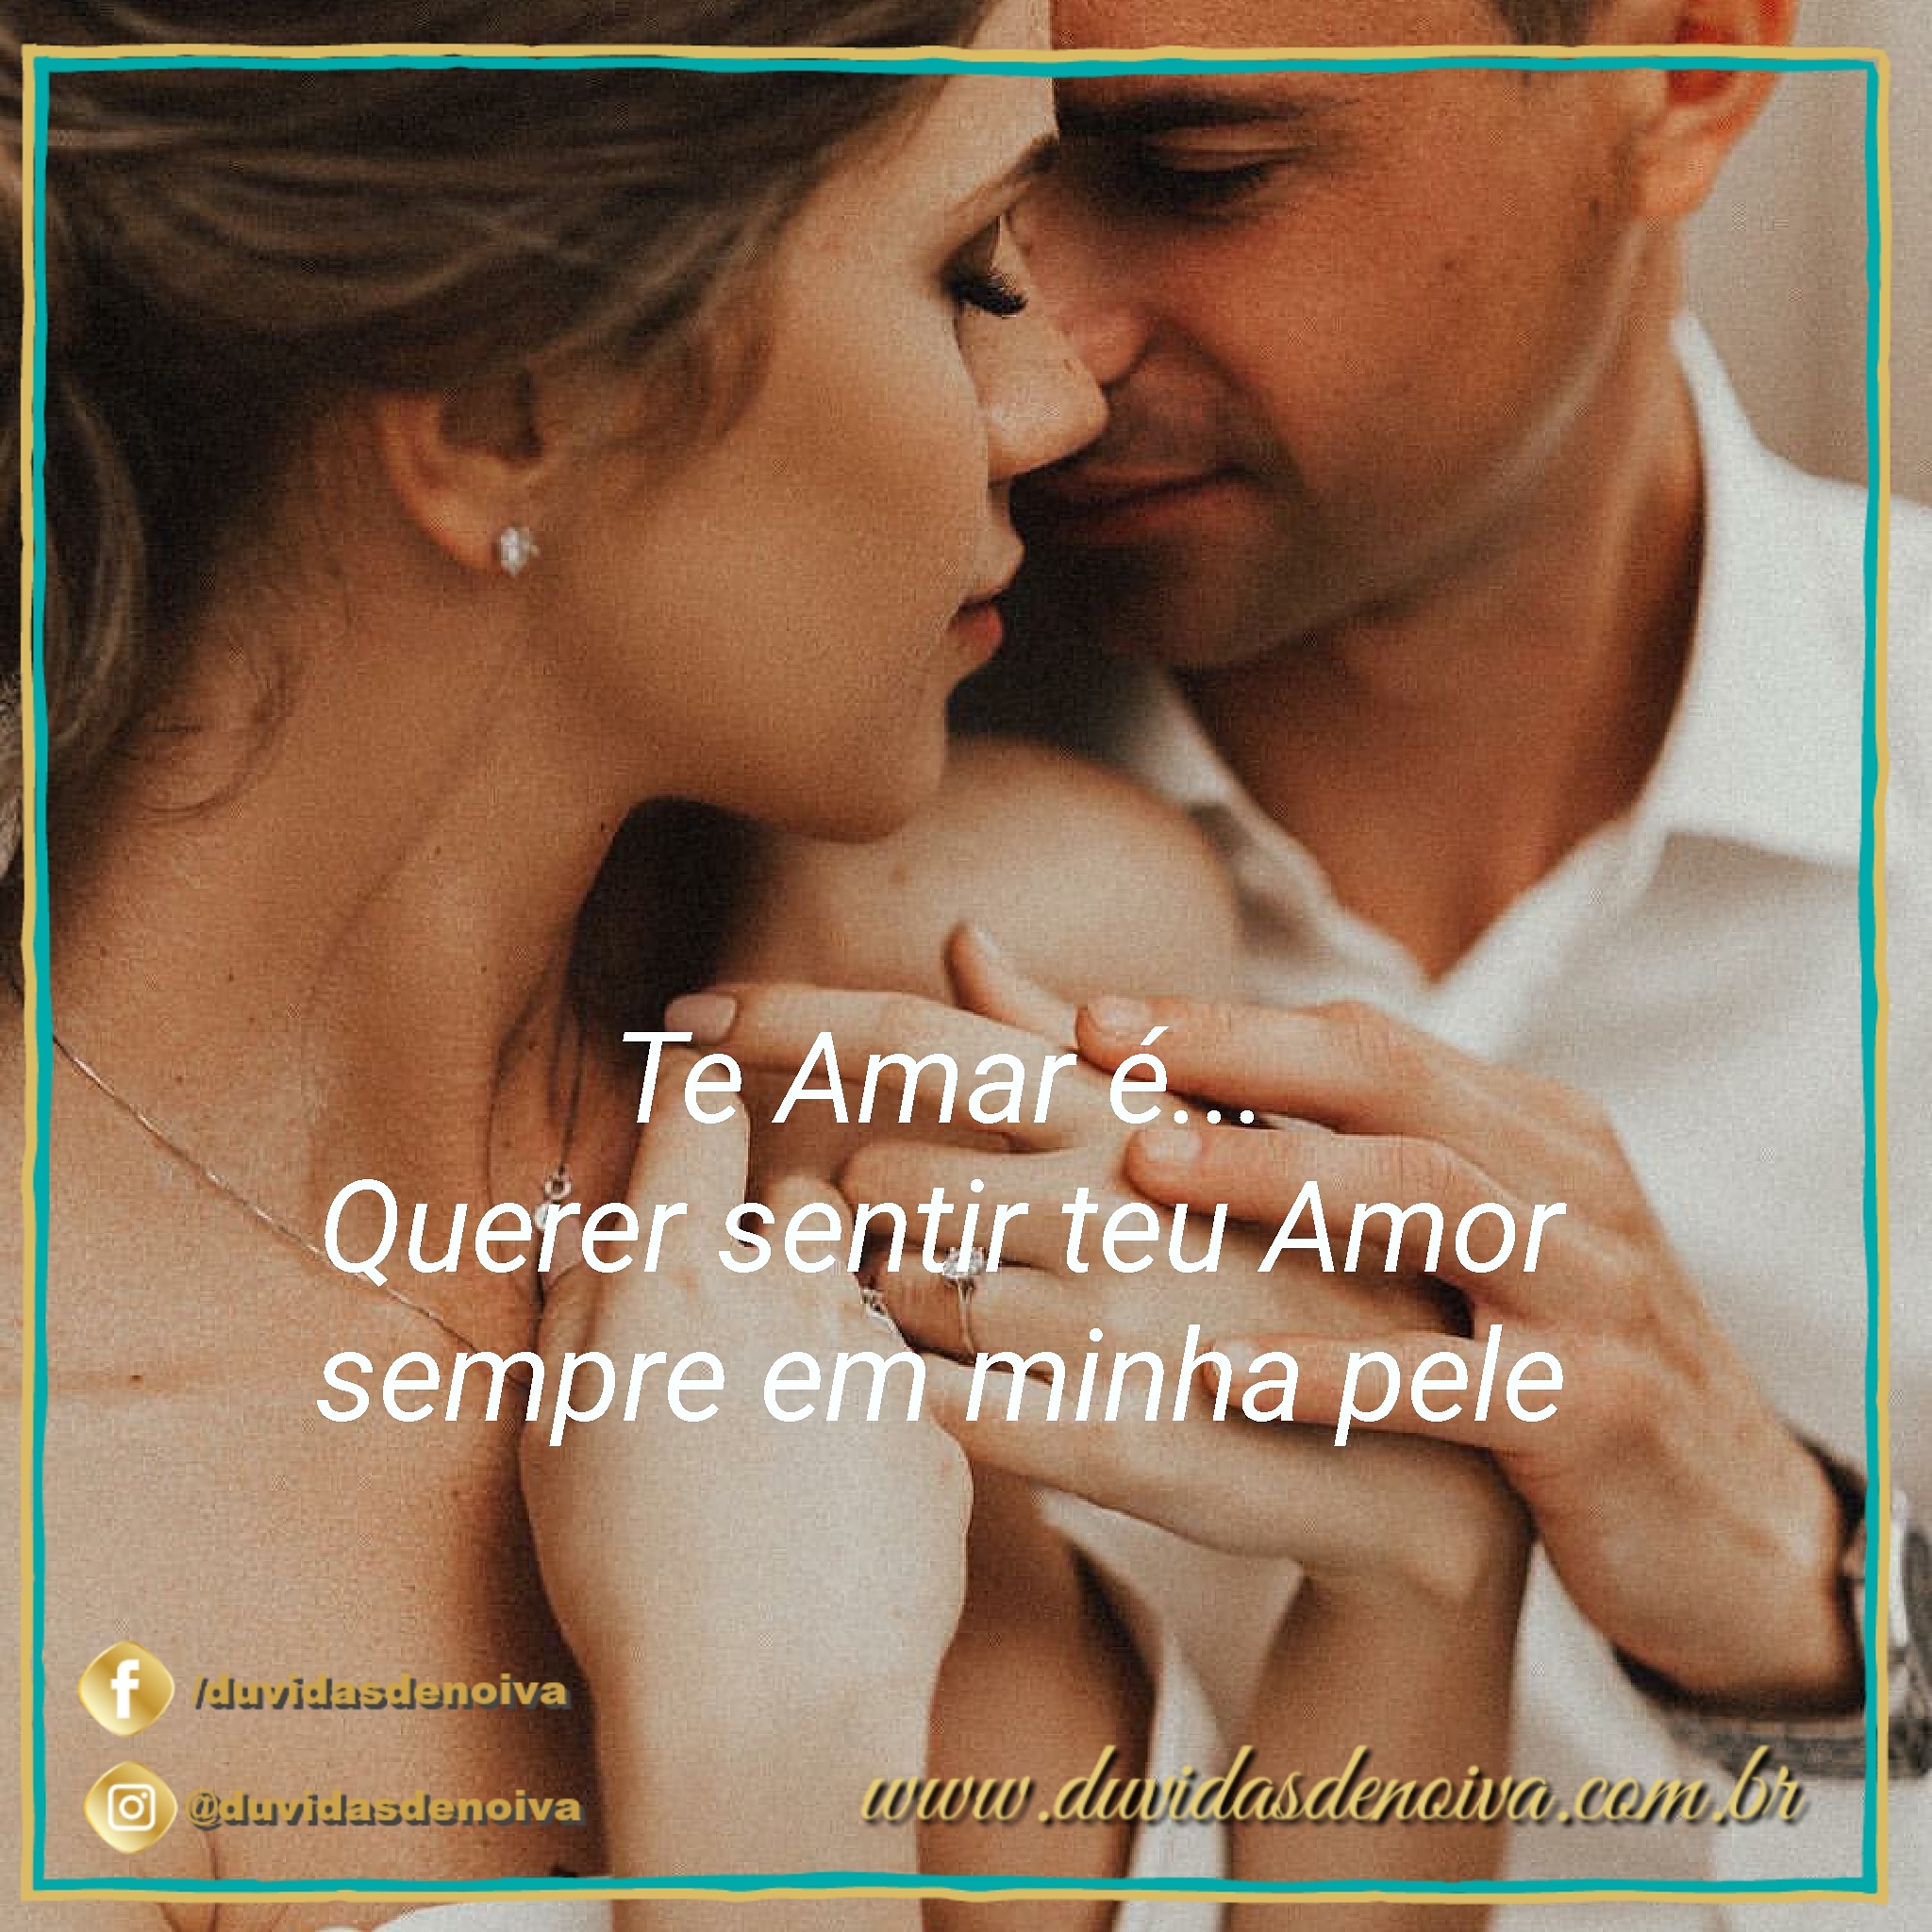 IMG 20190114 084313 532 - Te Amar é...posts de Amor